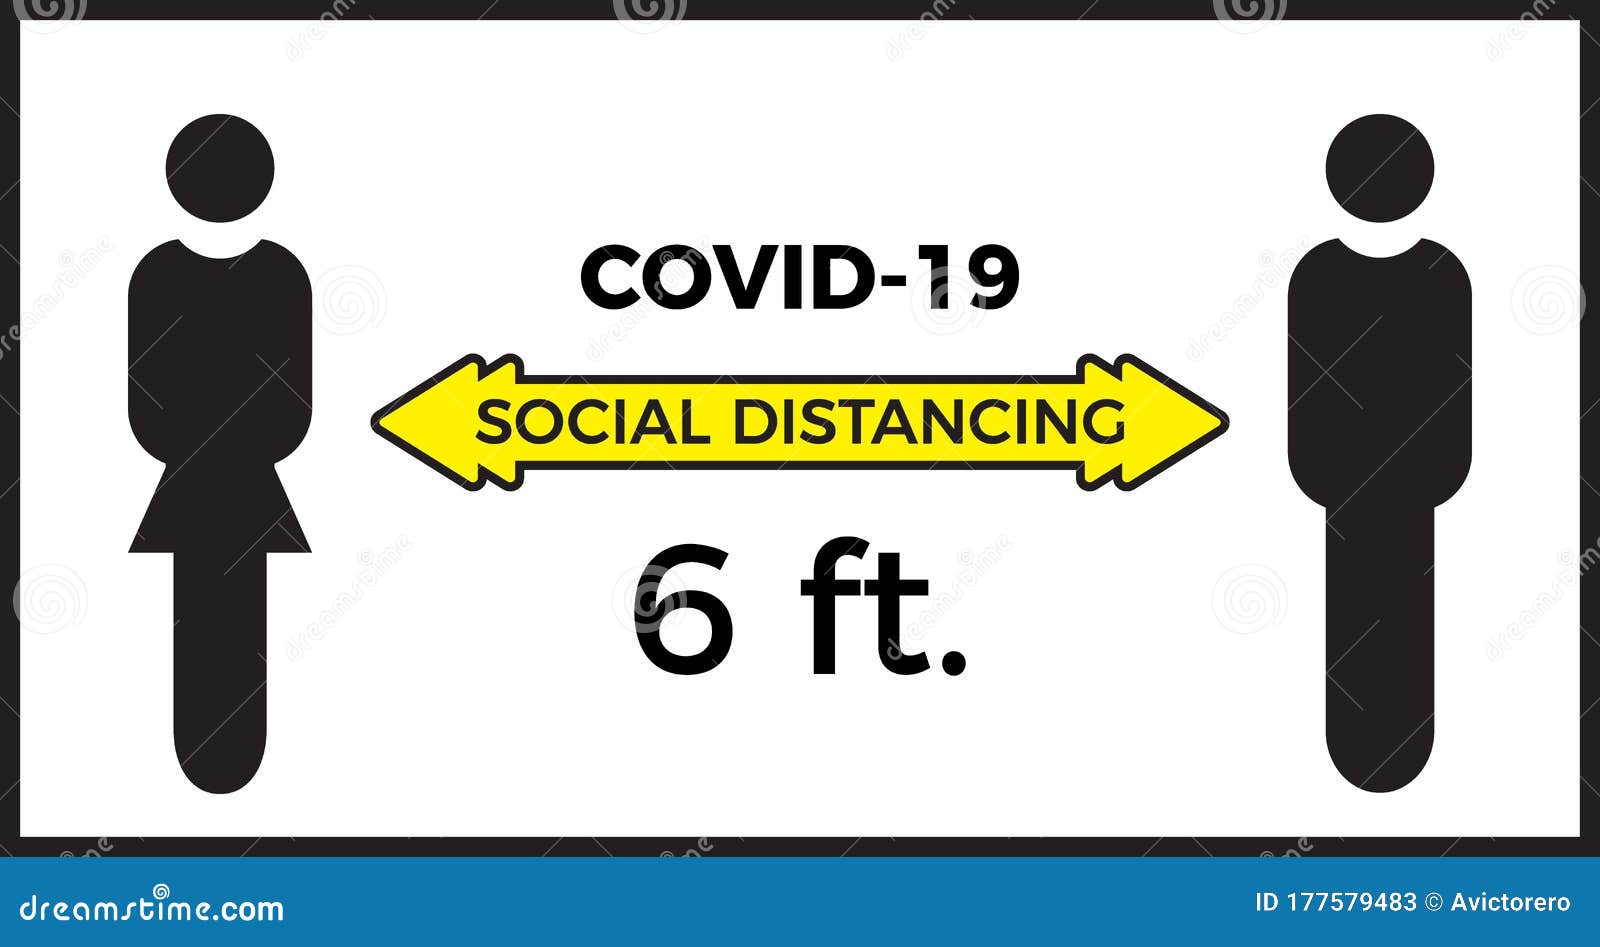 coronavirus covid-19 virus social distancing concept. stay six feet apart